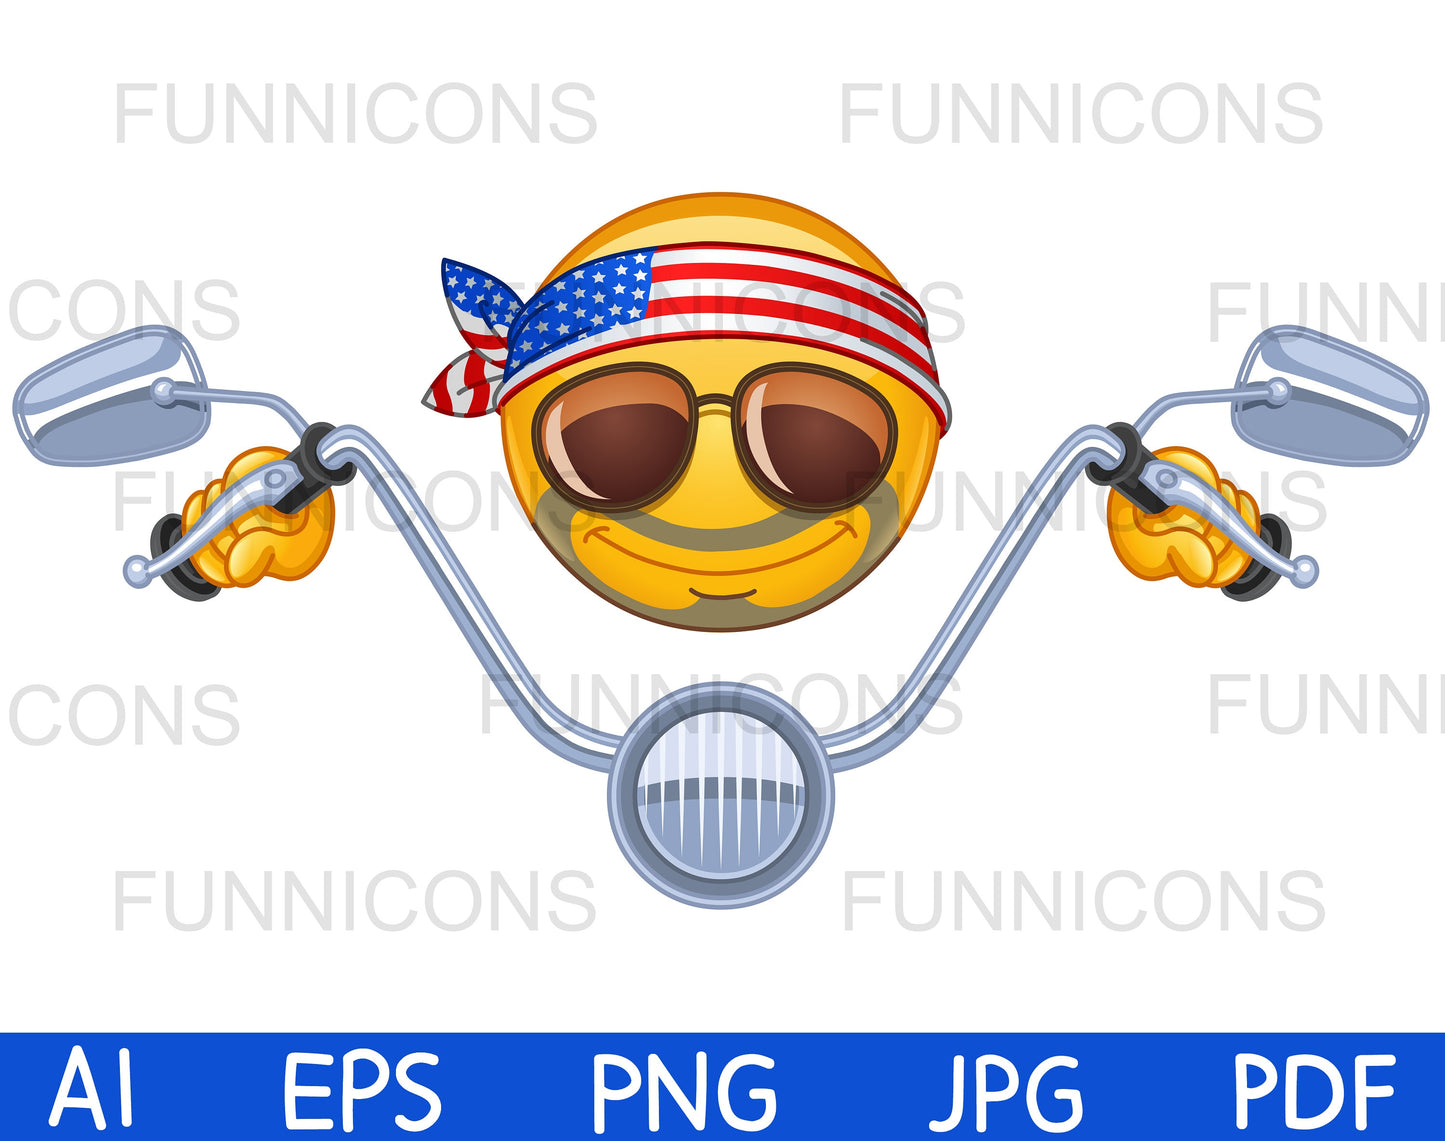 Biker Emoji Riding his Bike Wearing USA Flag Headband and Sunglasses.